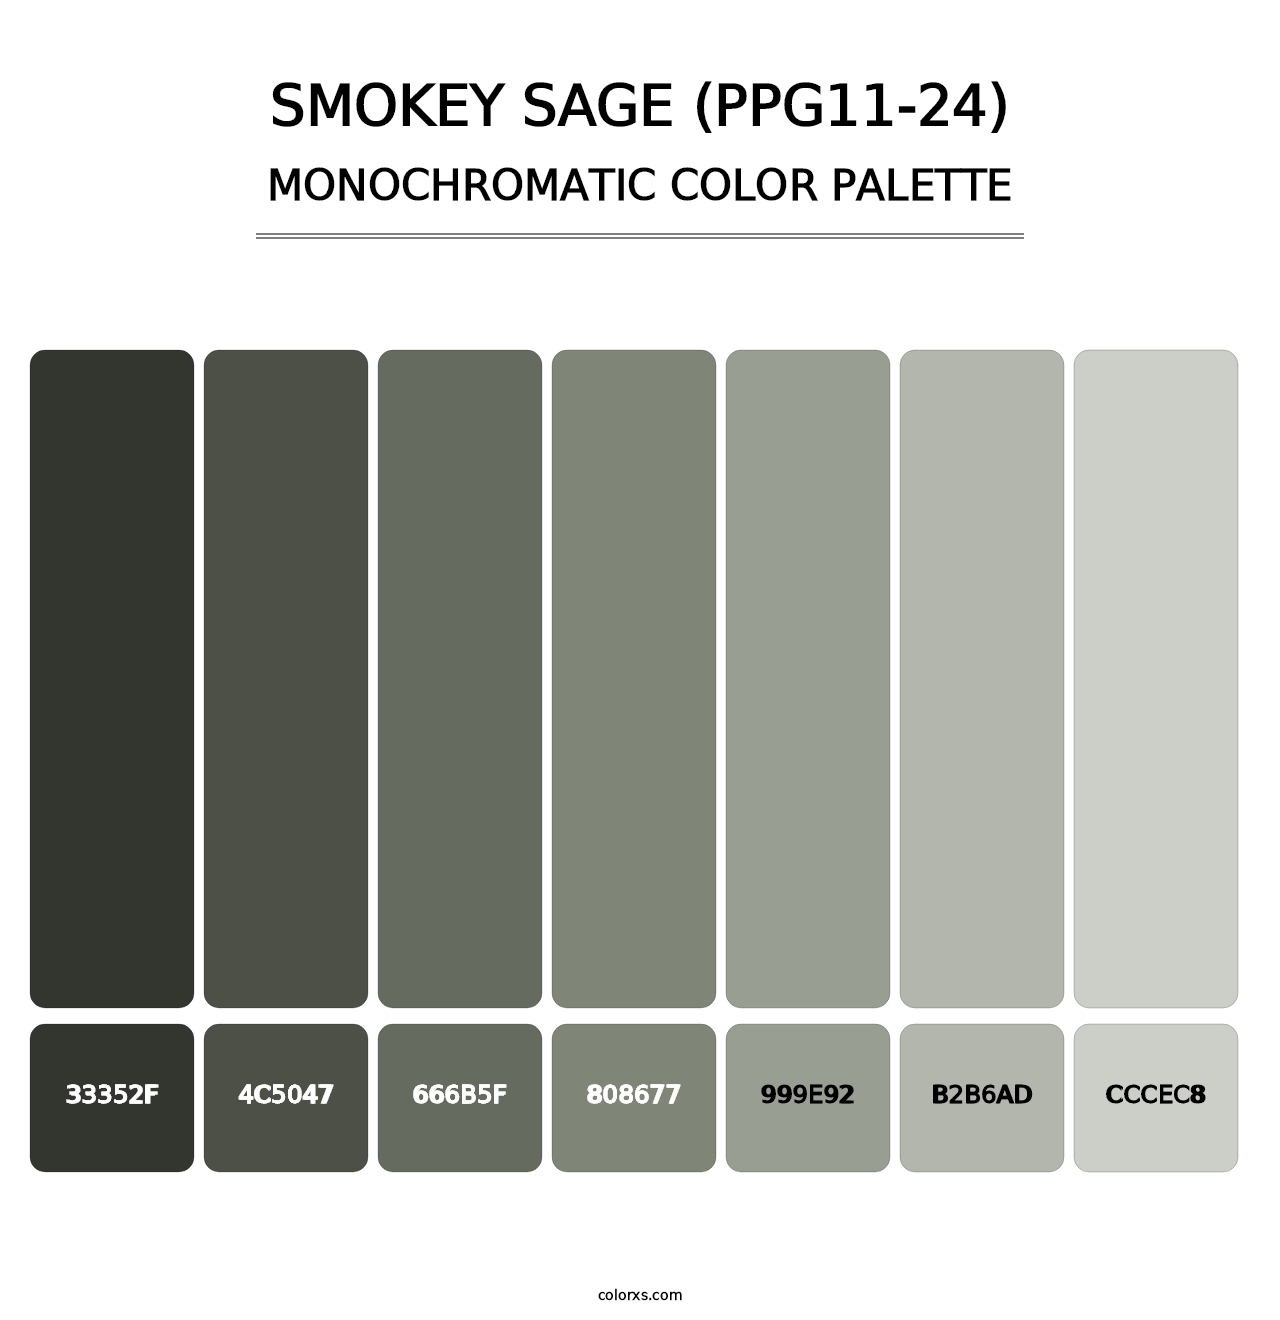 Smokey Sage (PPG11-24) - Monochromatic Color Palette